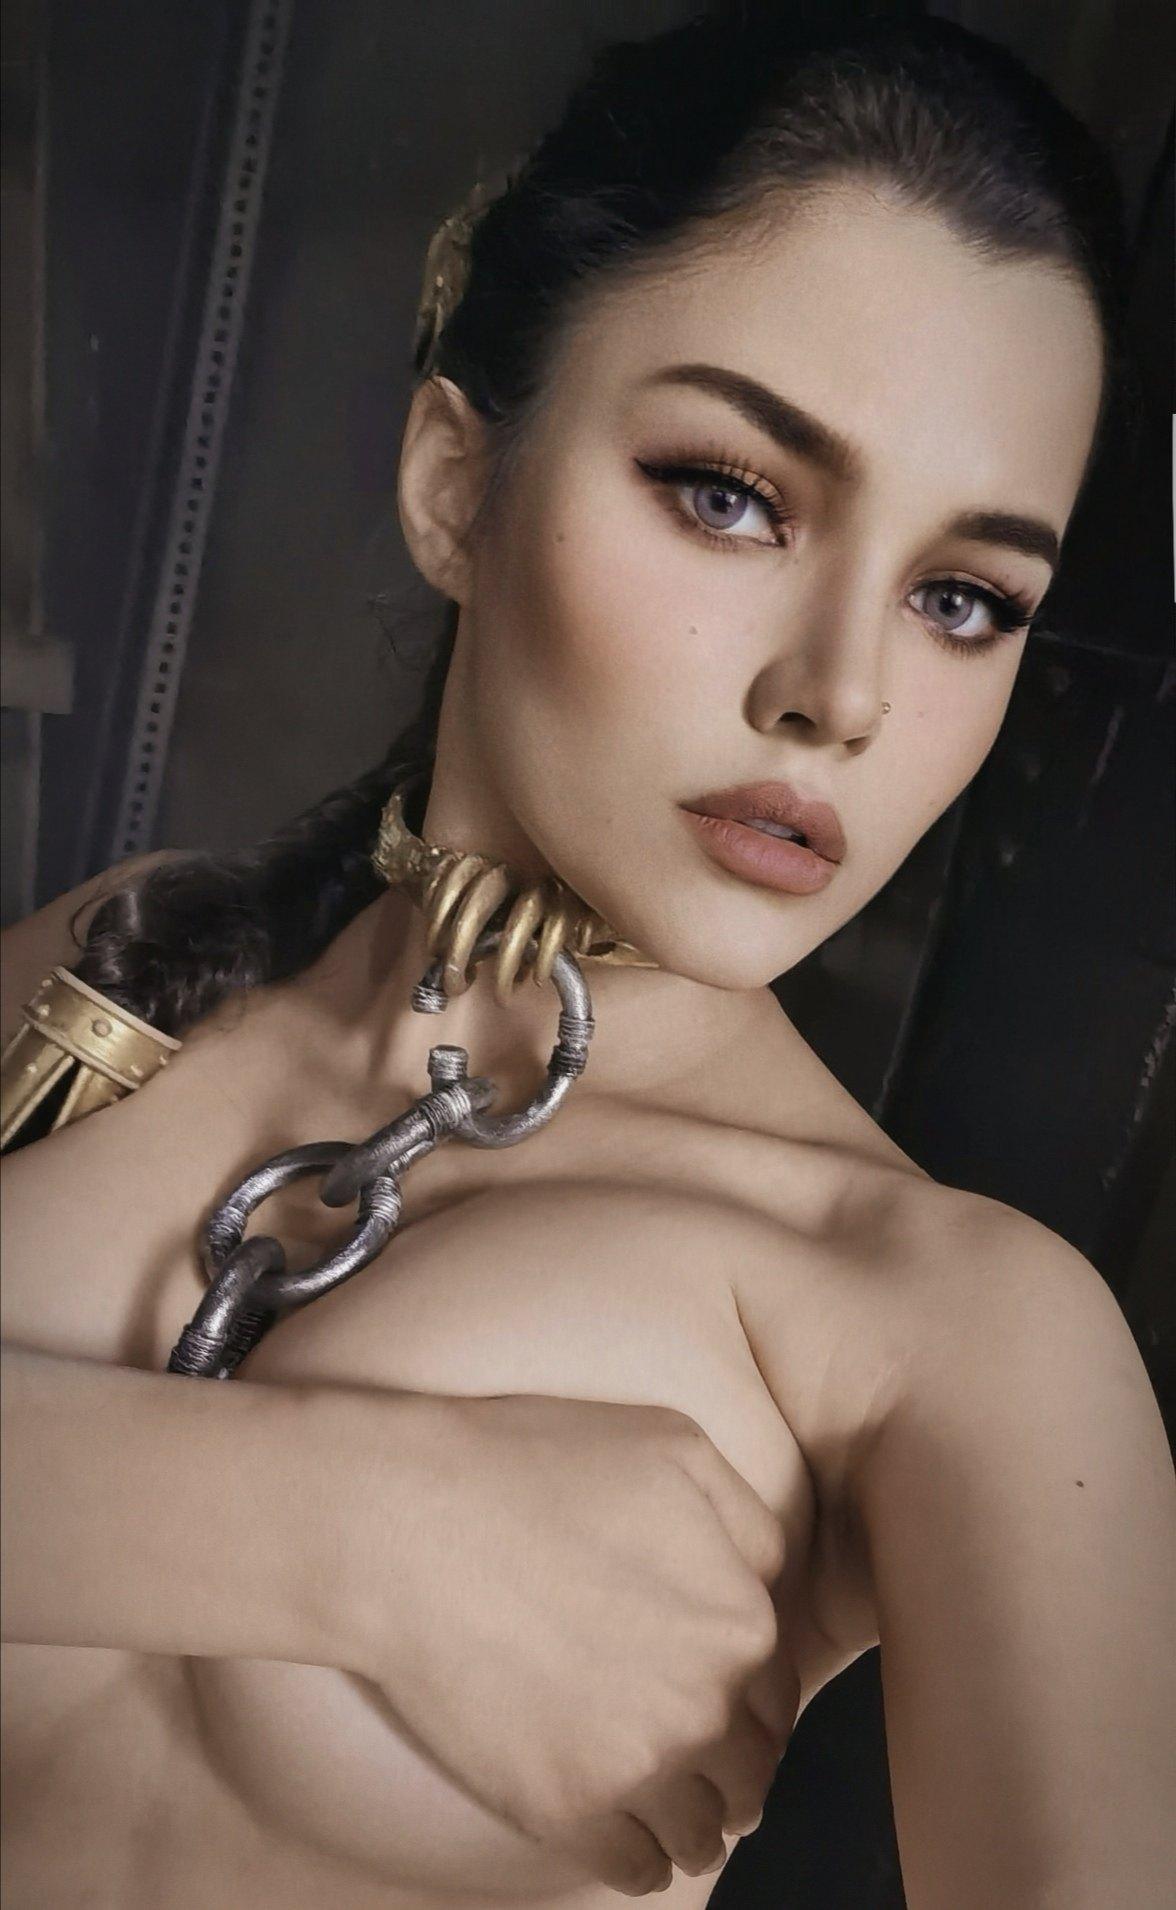 kalinka fox nude princess leia cosplay set leaked PIBRDM